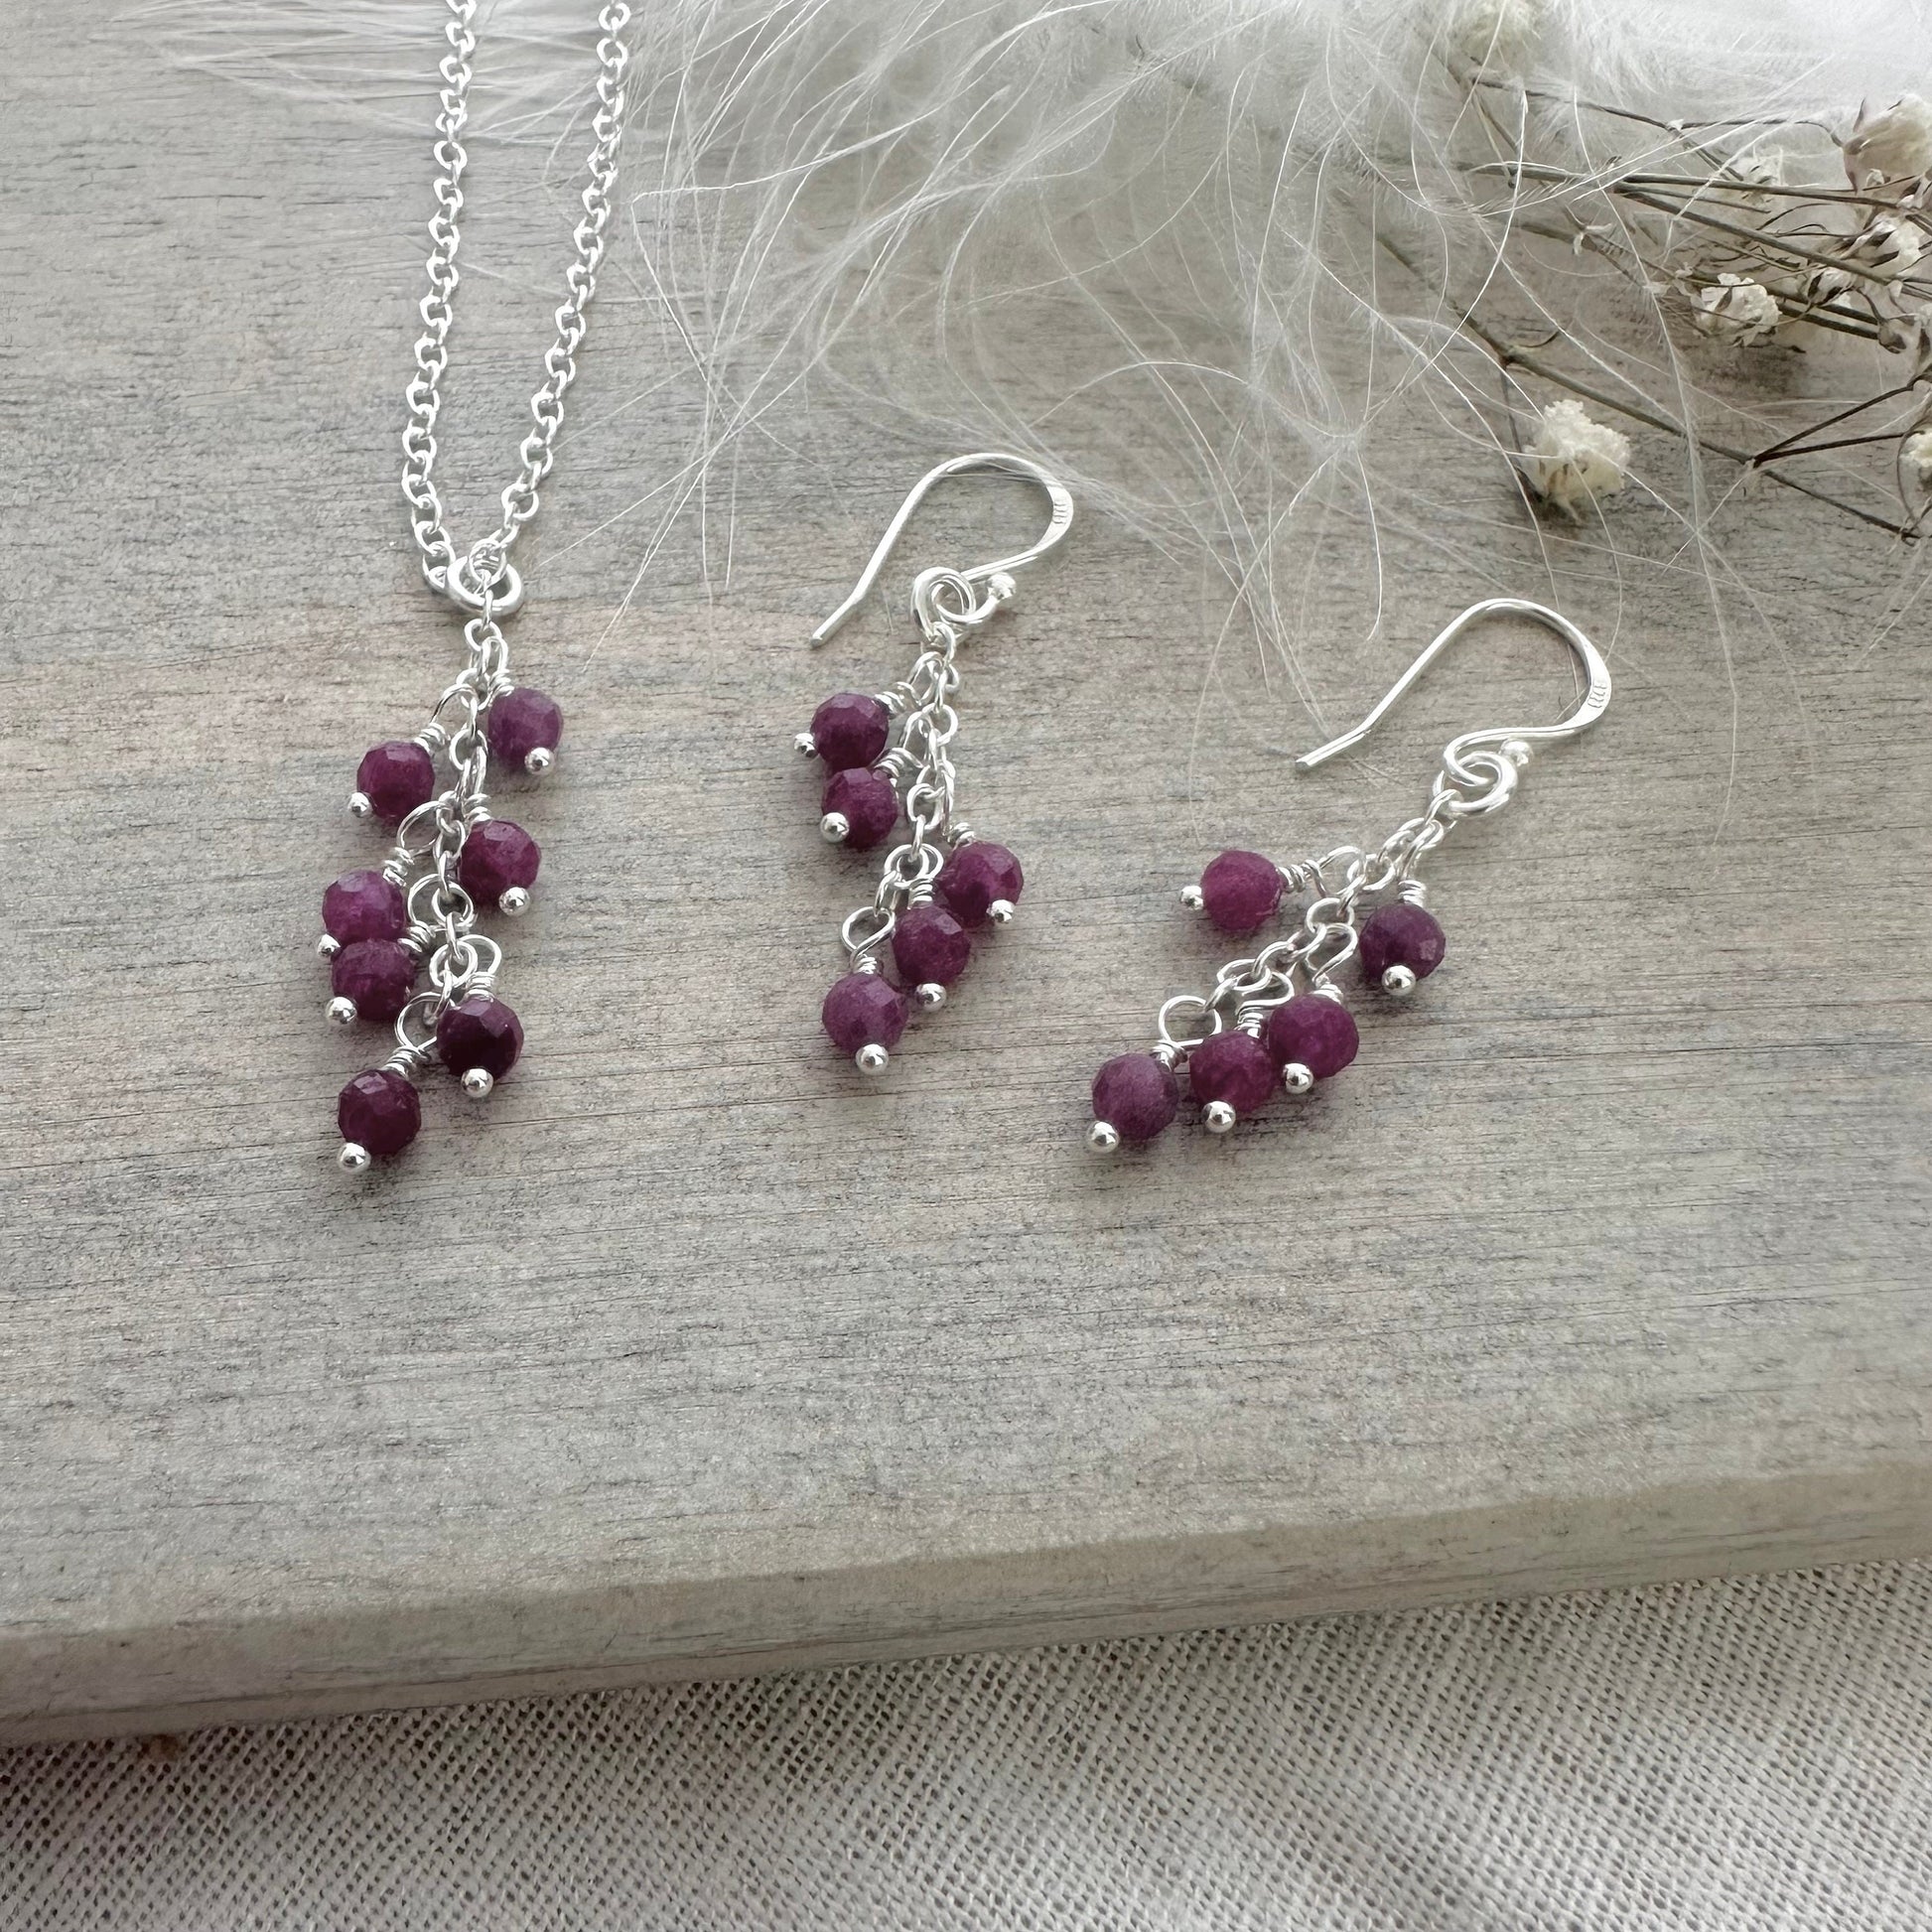 Ruby Necklace Earrings Set, July Birthstone Sterling Silver - Dainty Jewellery Gift for Women